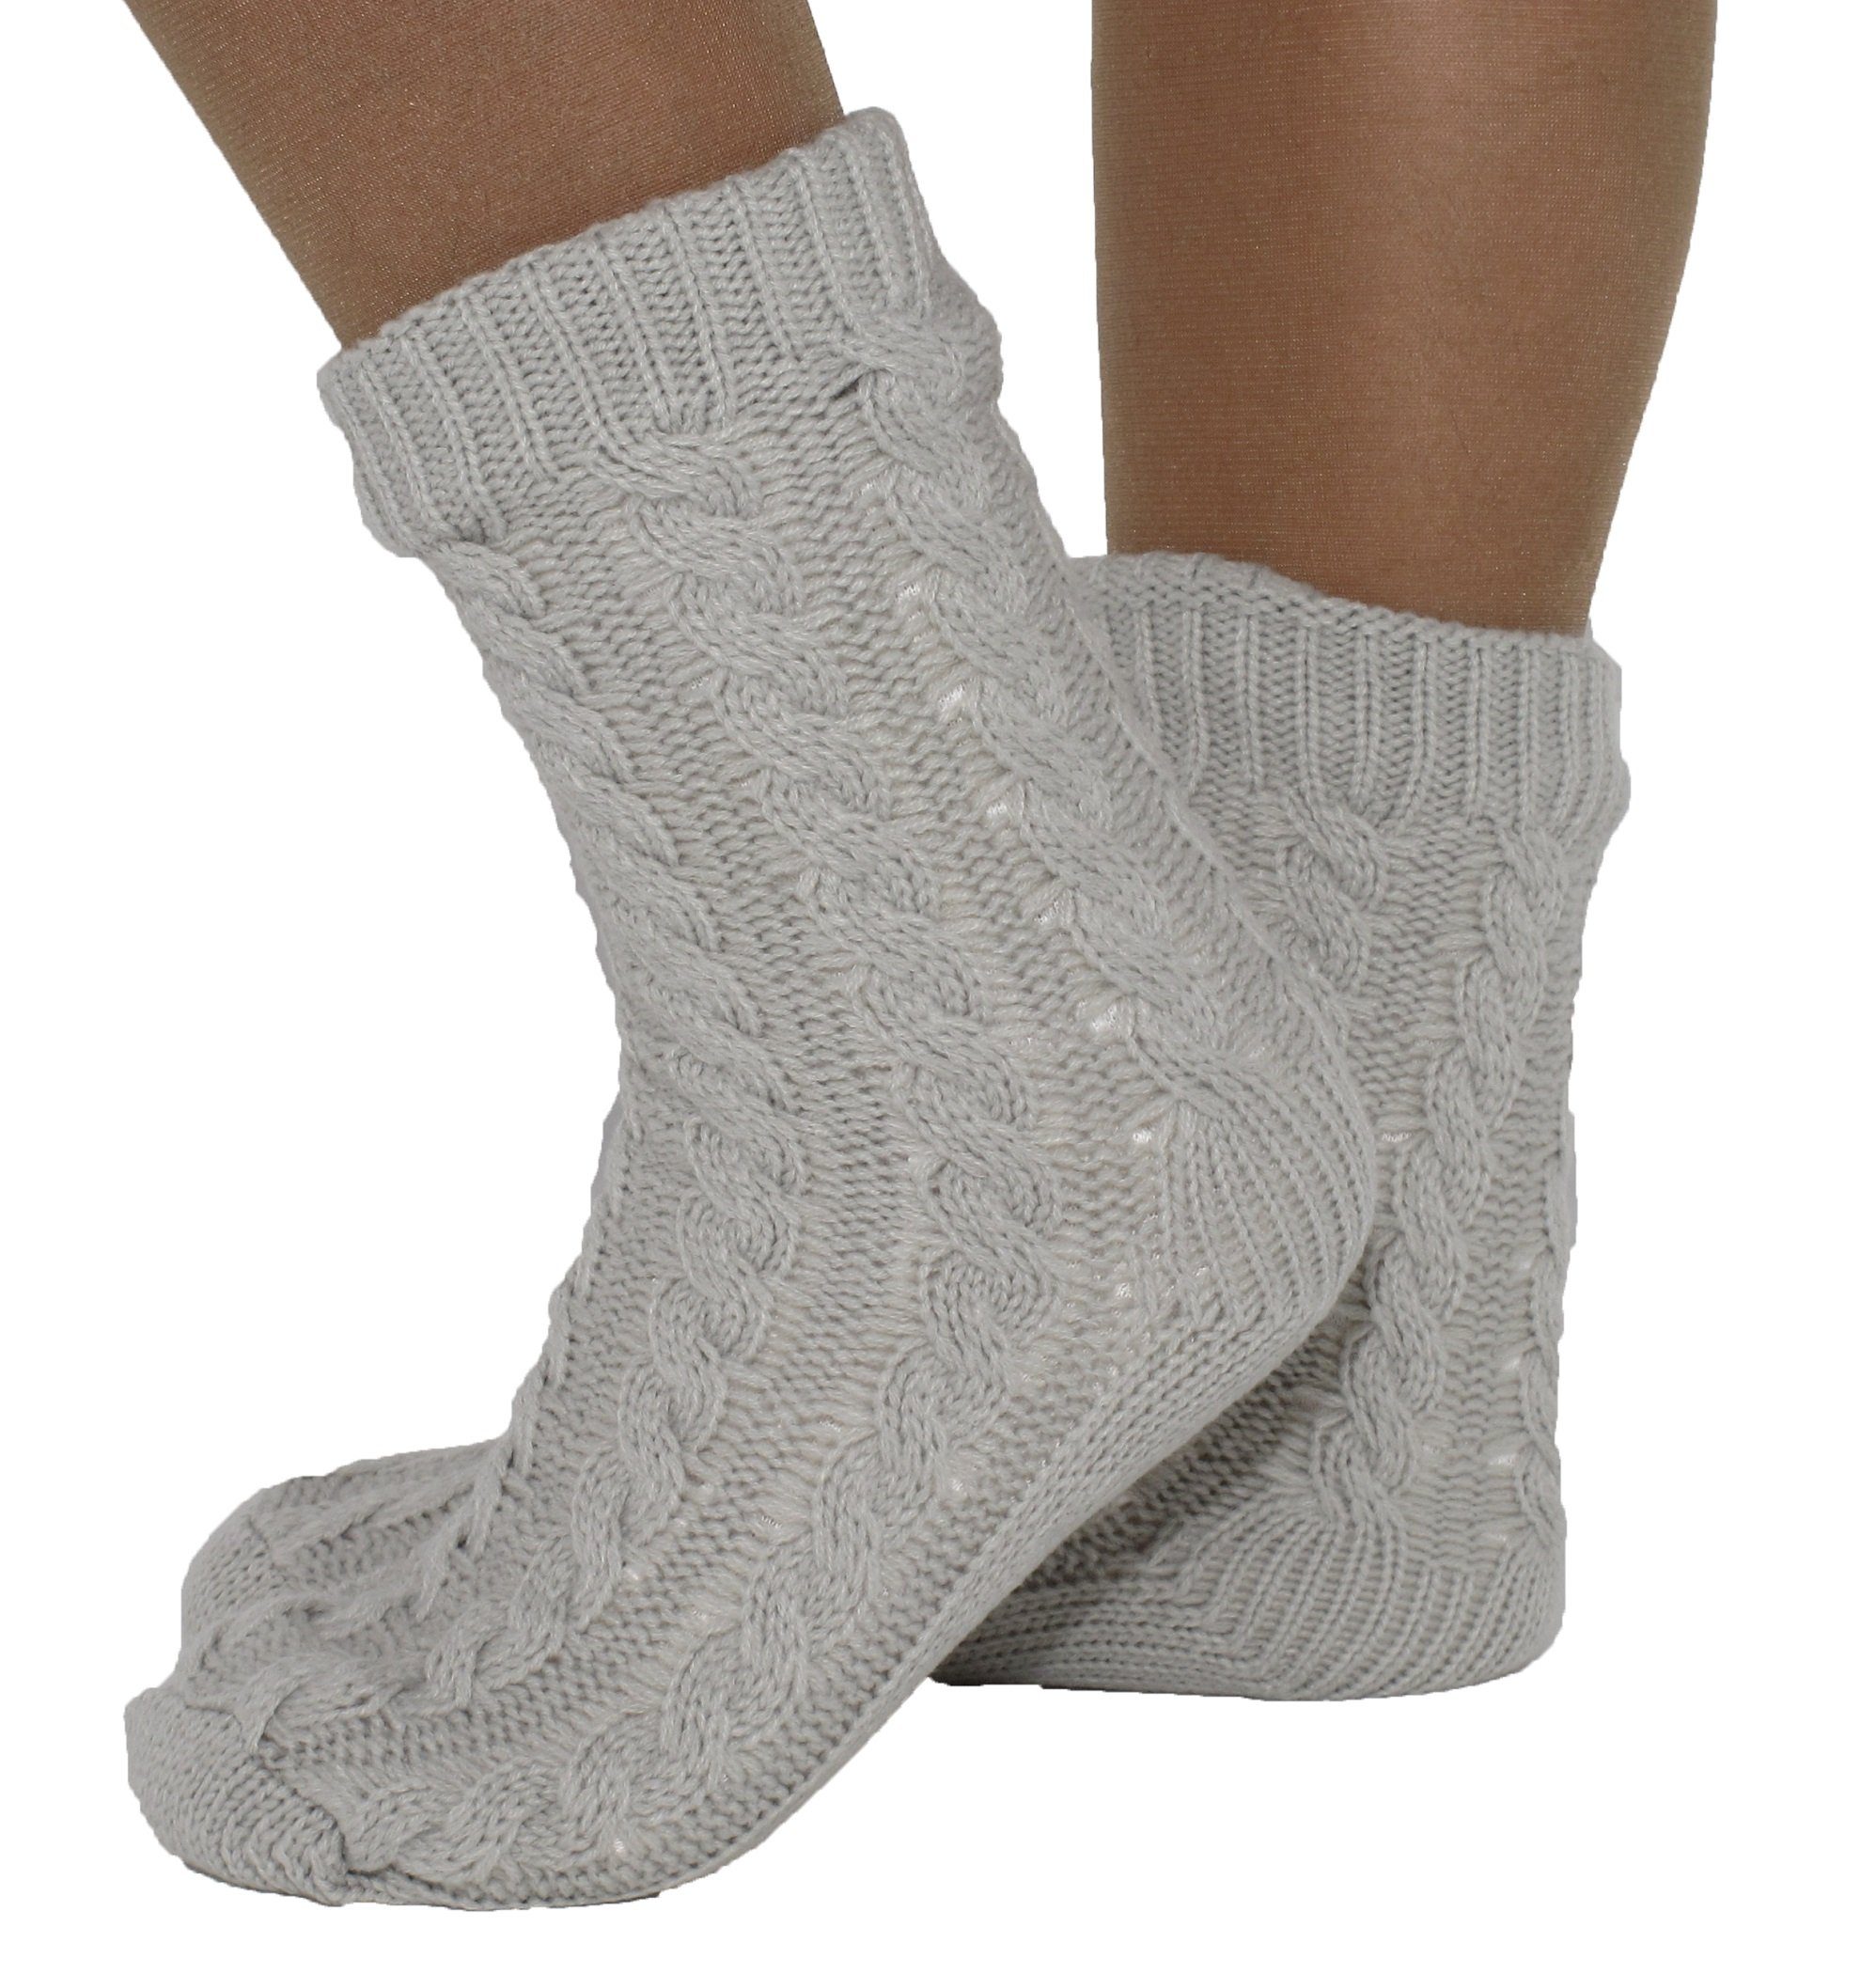 Markenwarenshop-Style М'які шкарпеточки Hüttensocken Шкарпетки для дому Шкарпетки Teddy Strickmuster Zopf 35-38 Farbe: